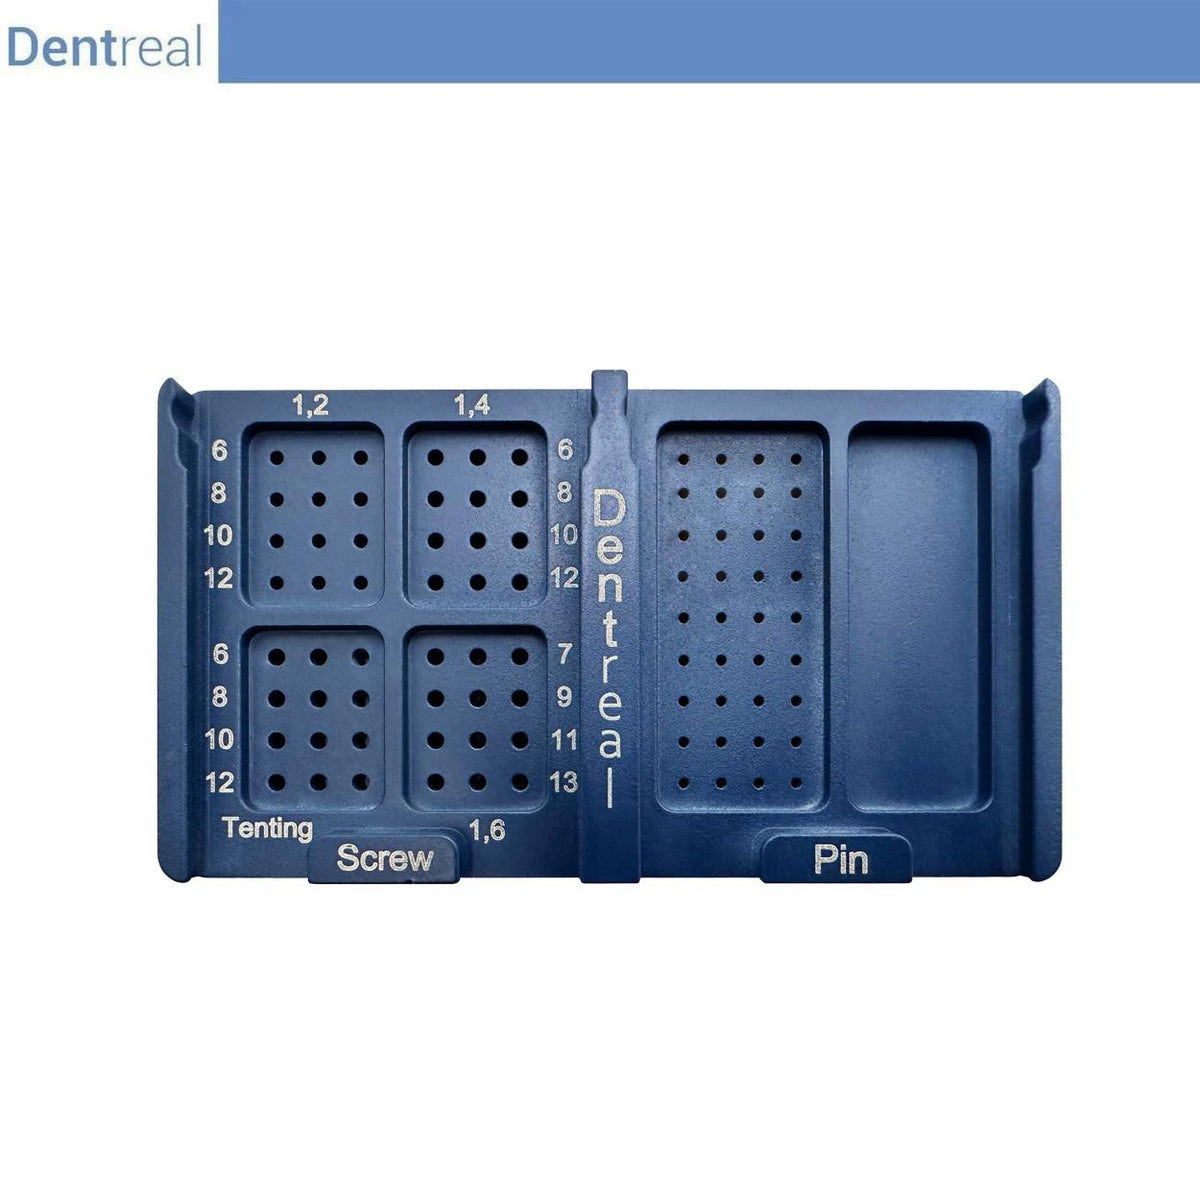 DentrealStore - Dentreal Memfix GBR Pin & Screw Stand - Sterilization Box